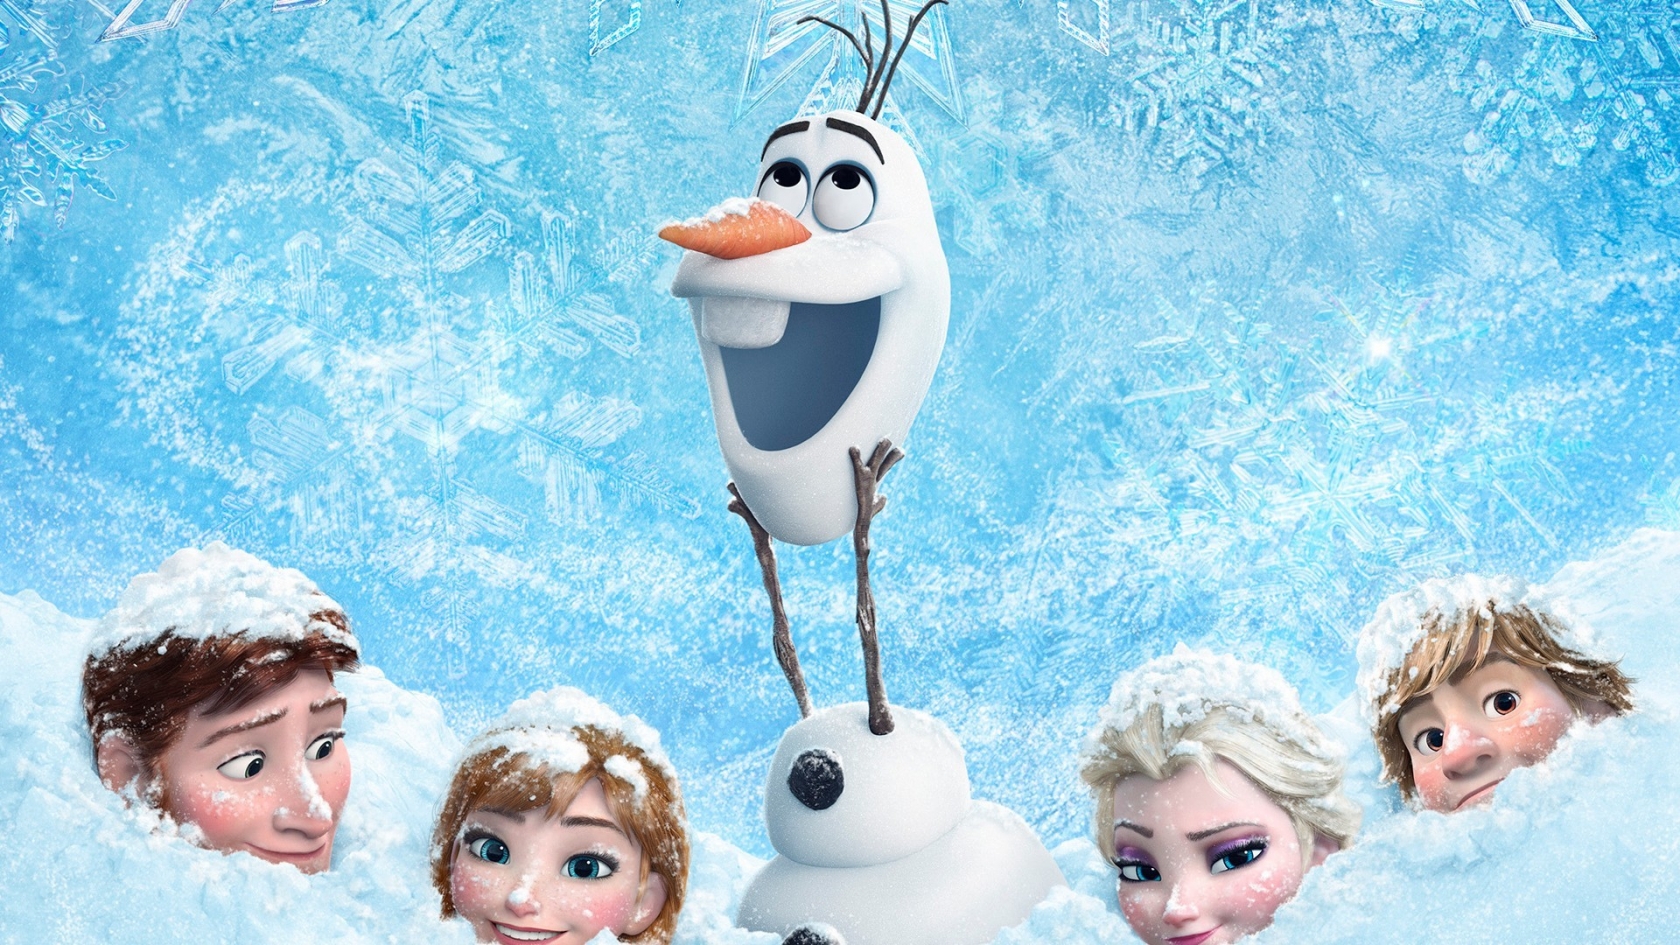 Frozen Animation for 1680 x 945 HDTV resolution